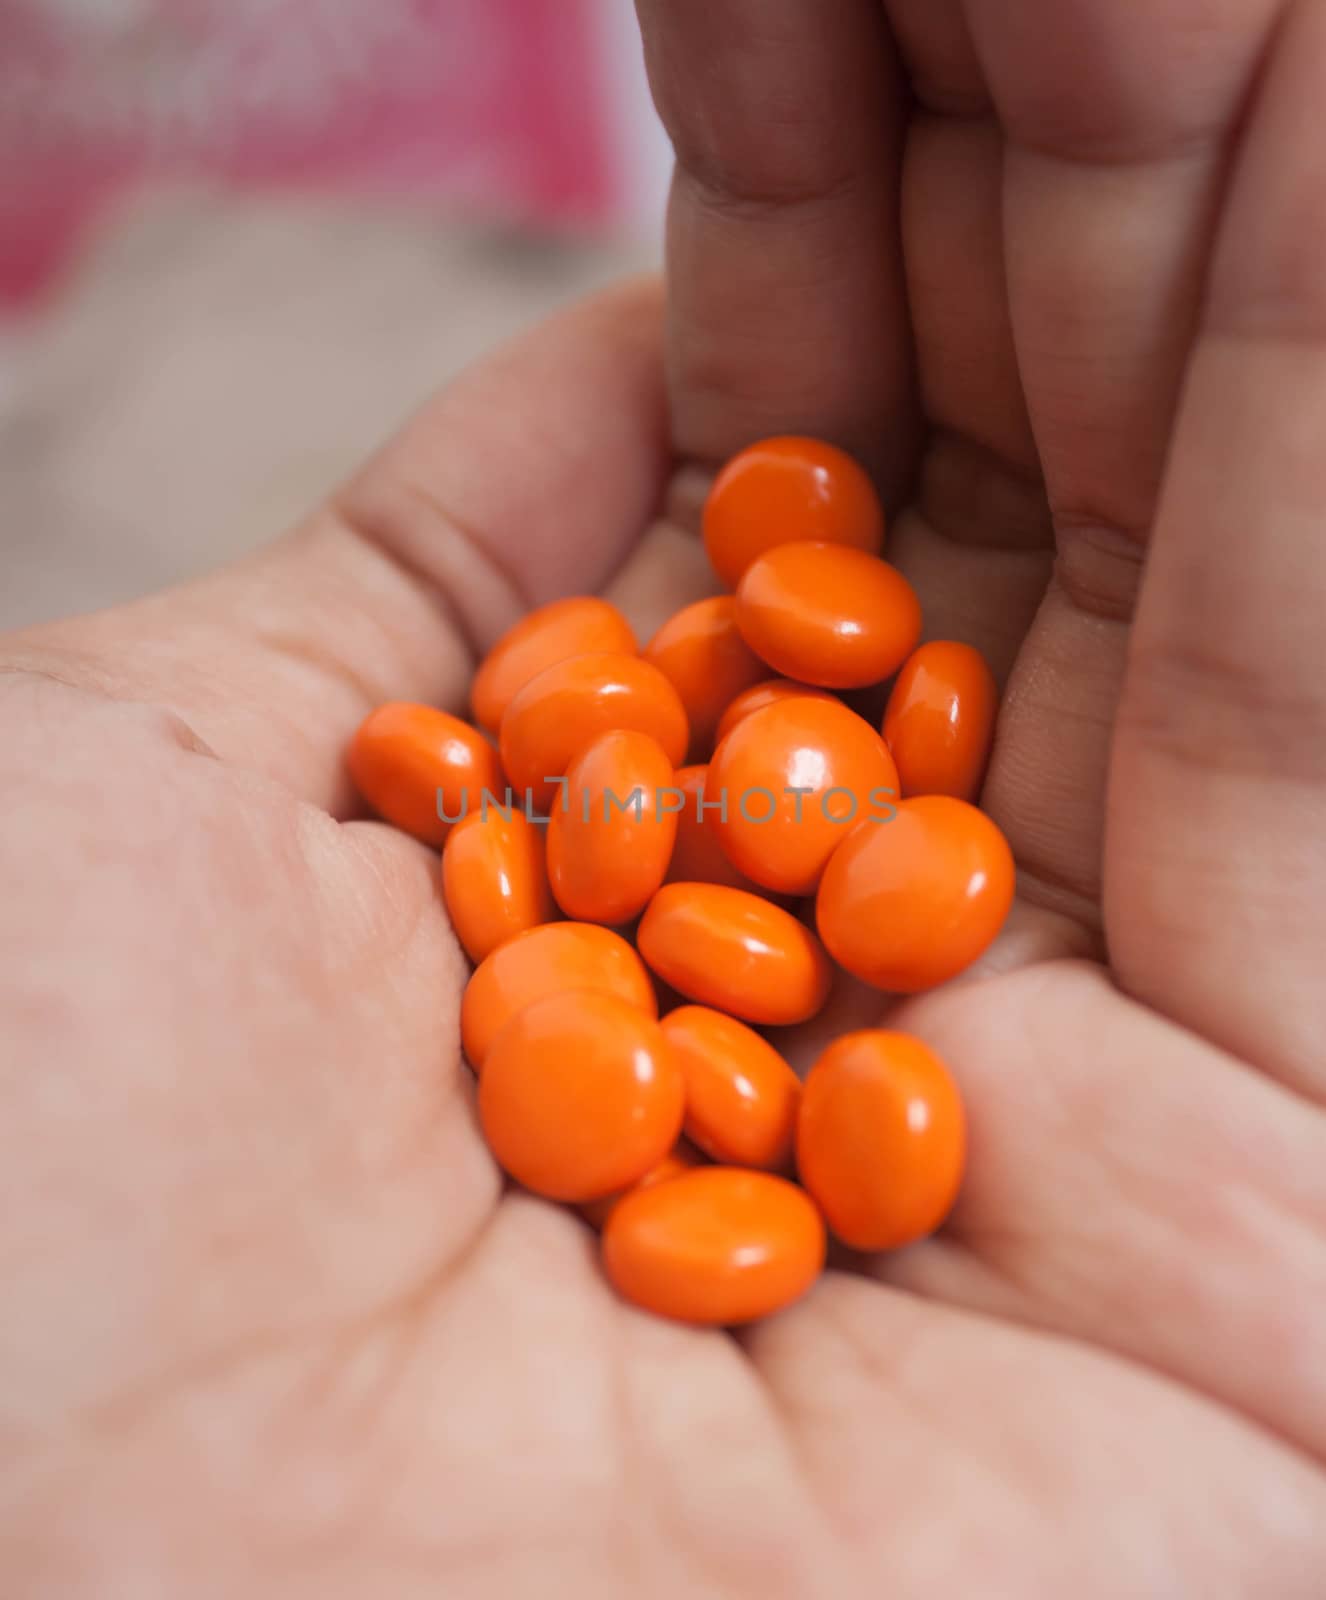 Orange pills closeup on hands.